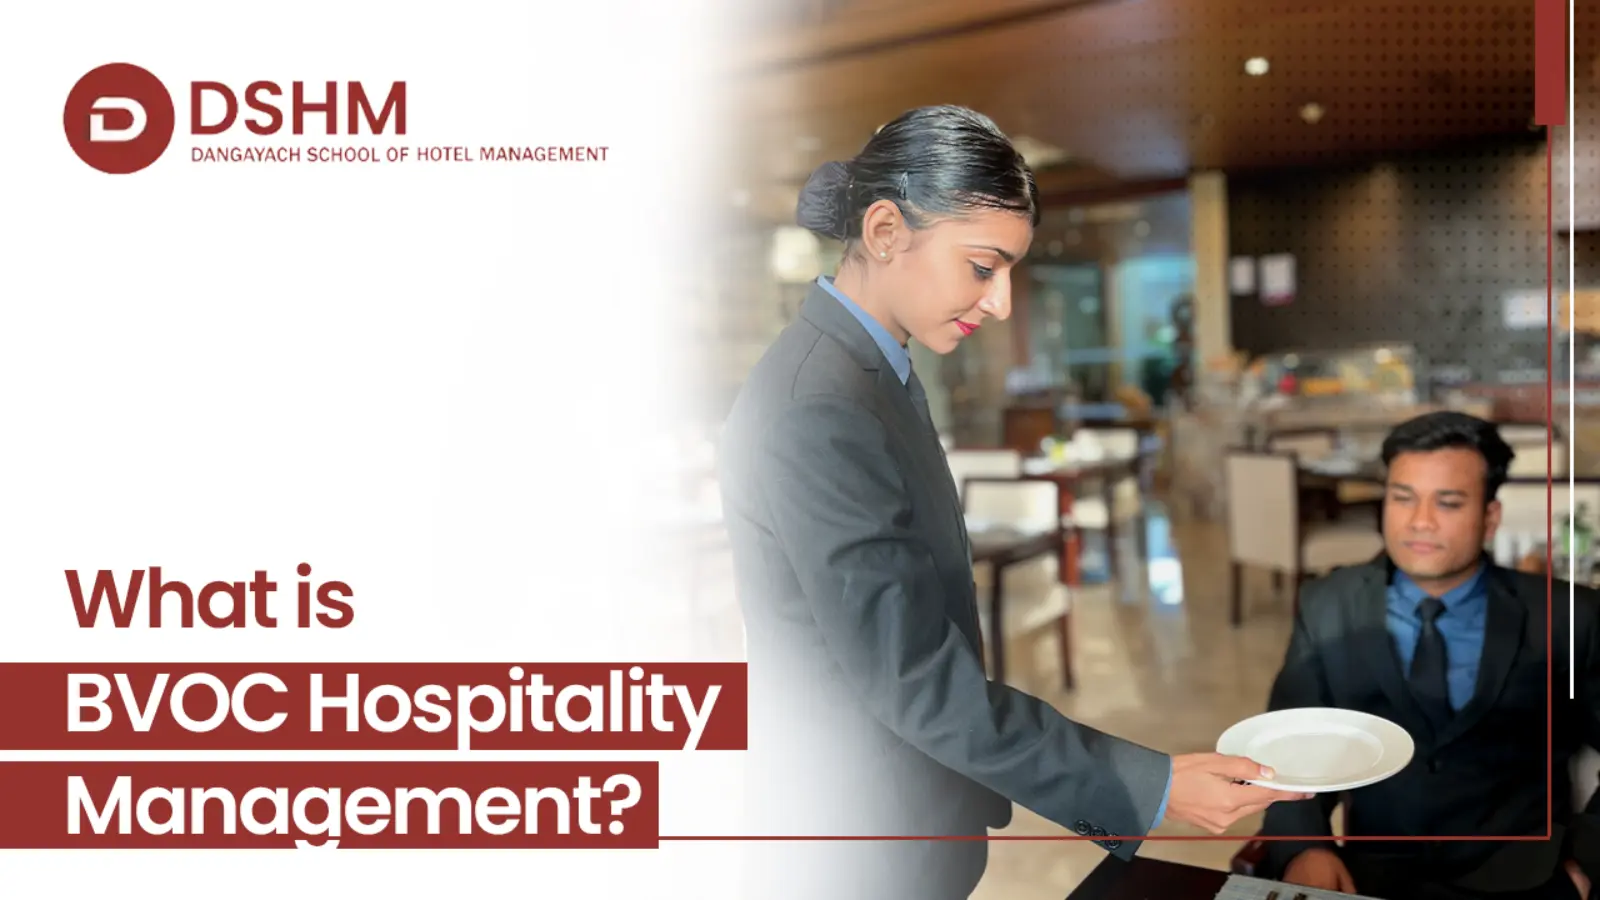 BVoc in hotel management